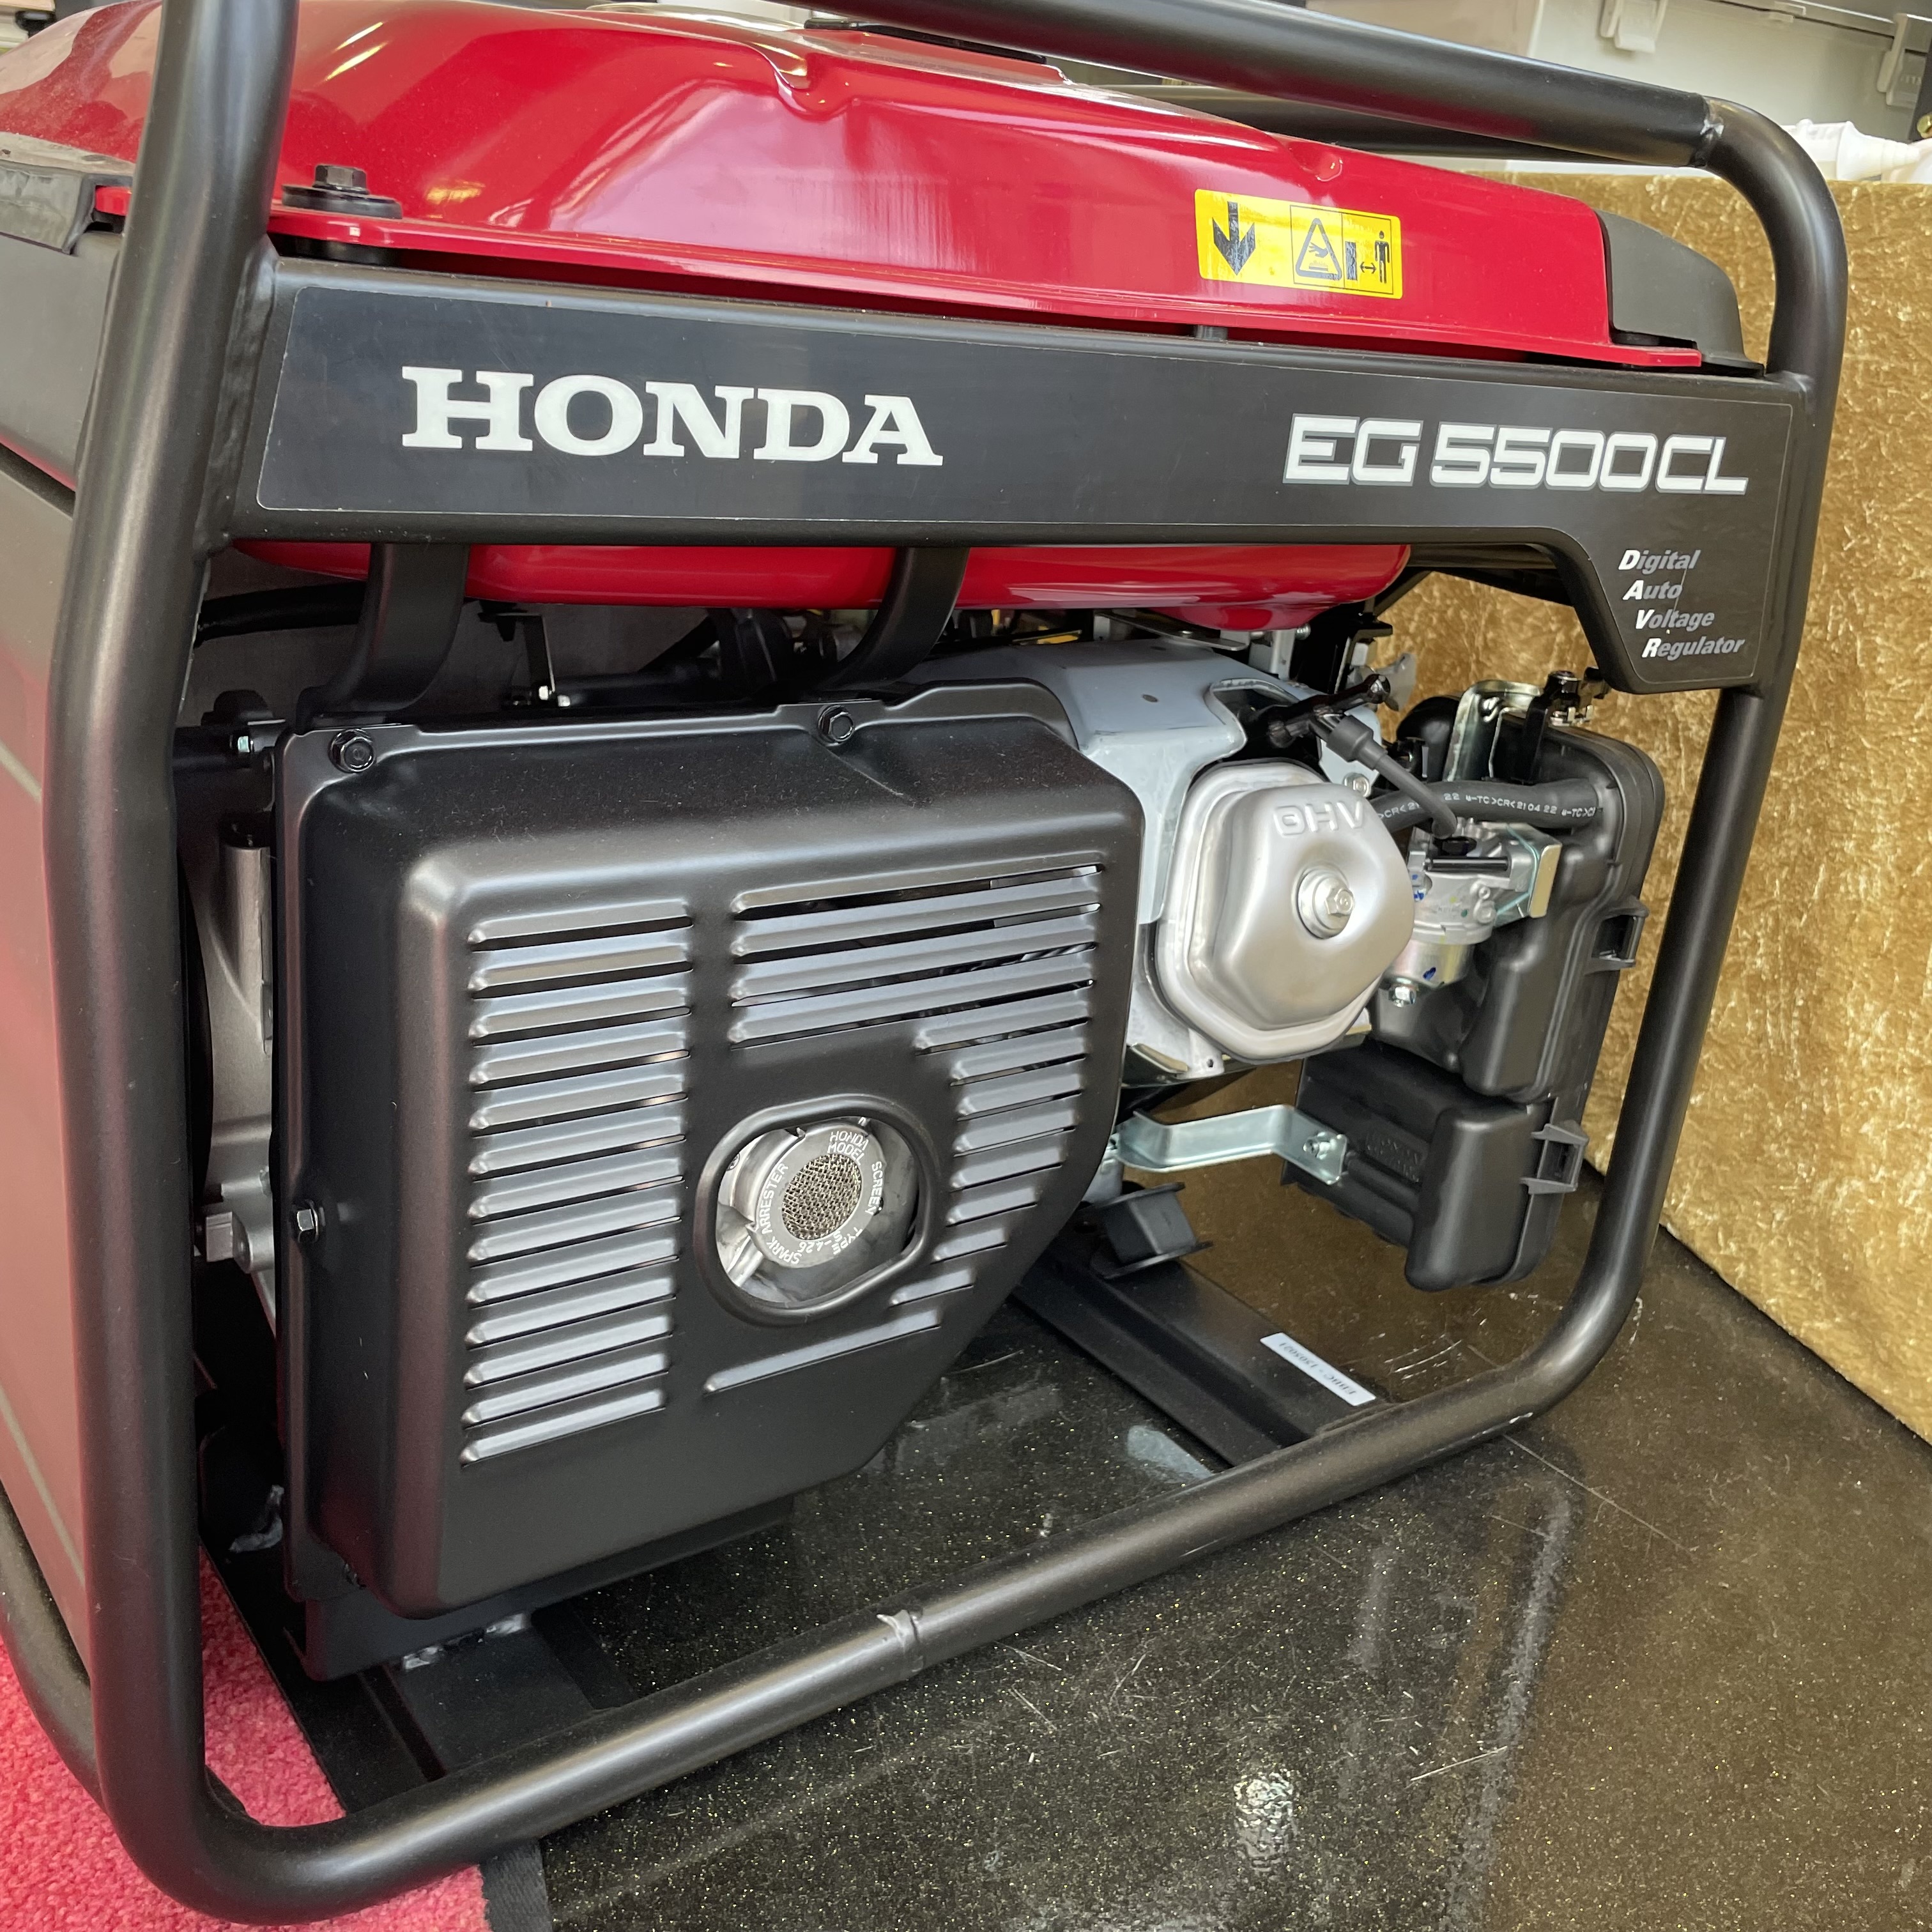 [OUTLET#49] 5kW Benzin Honda Stromaggregat 5000 Watt EG5500CL